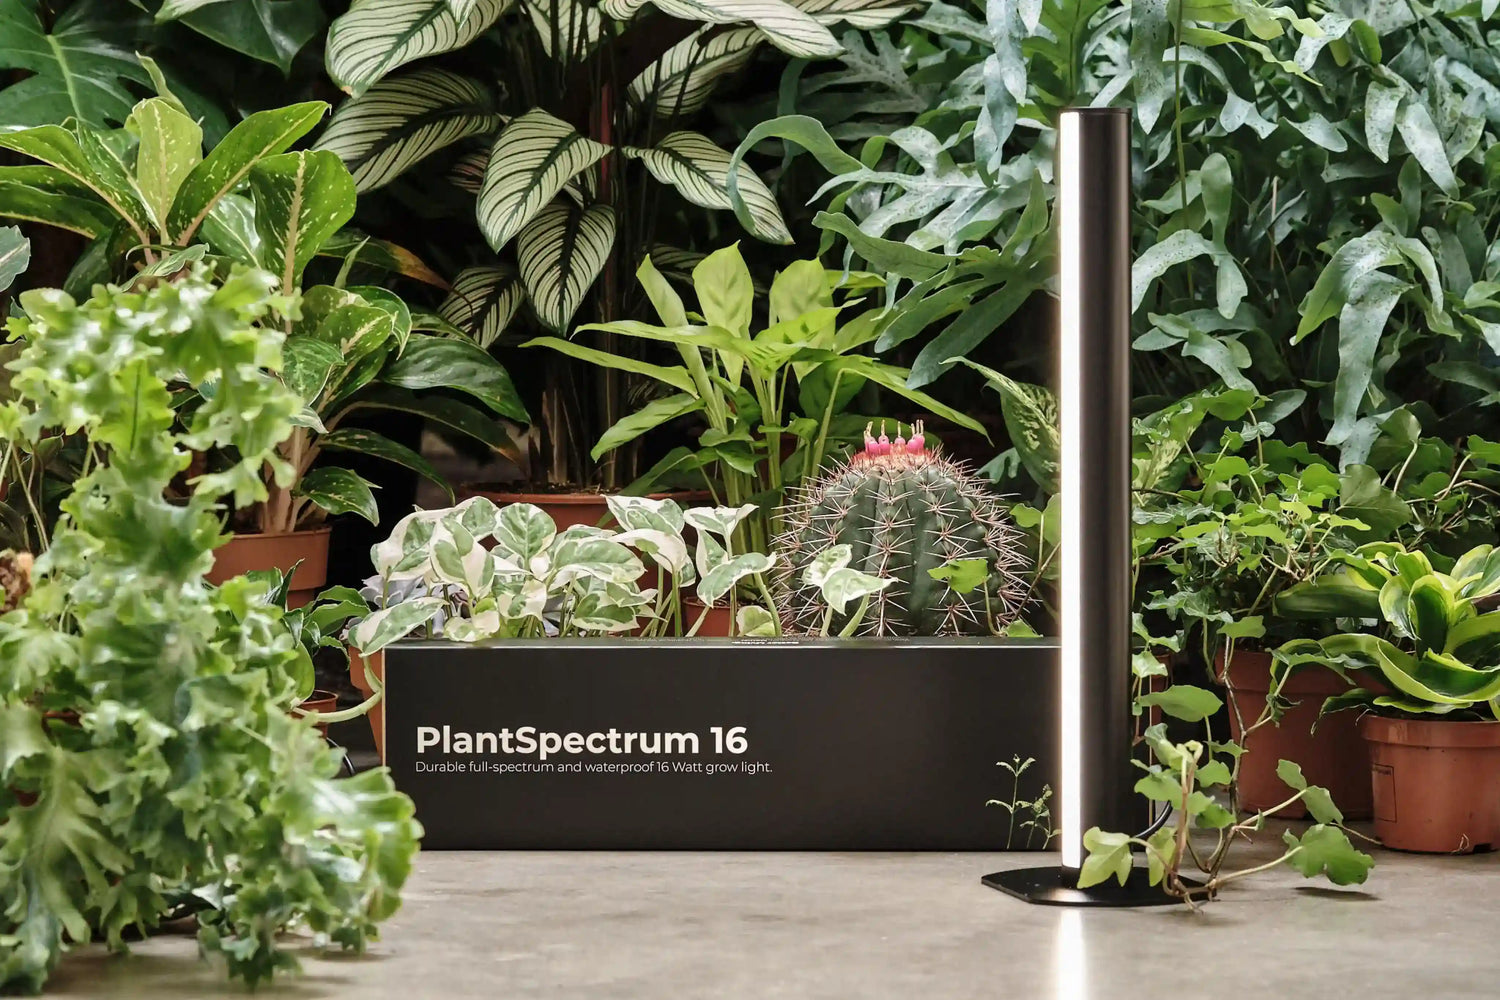 16” PlantSpectrum Grow Light in front of foliage